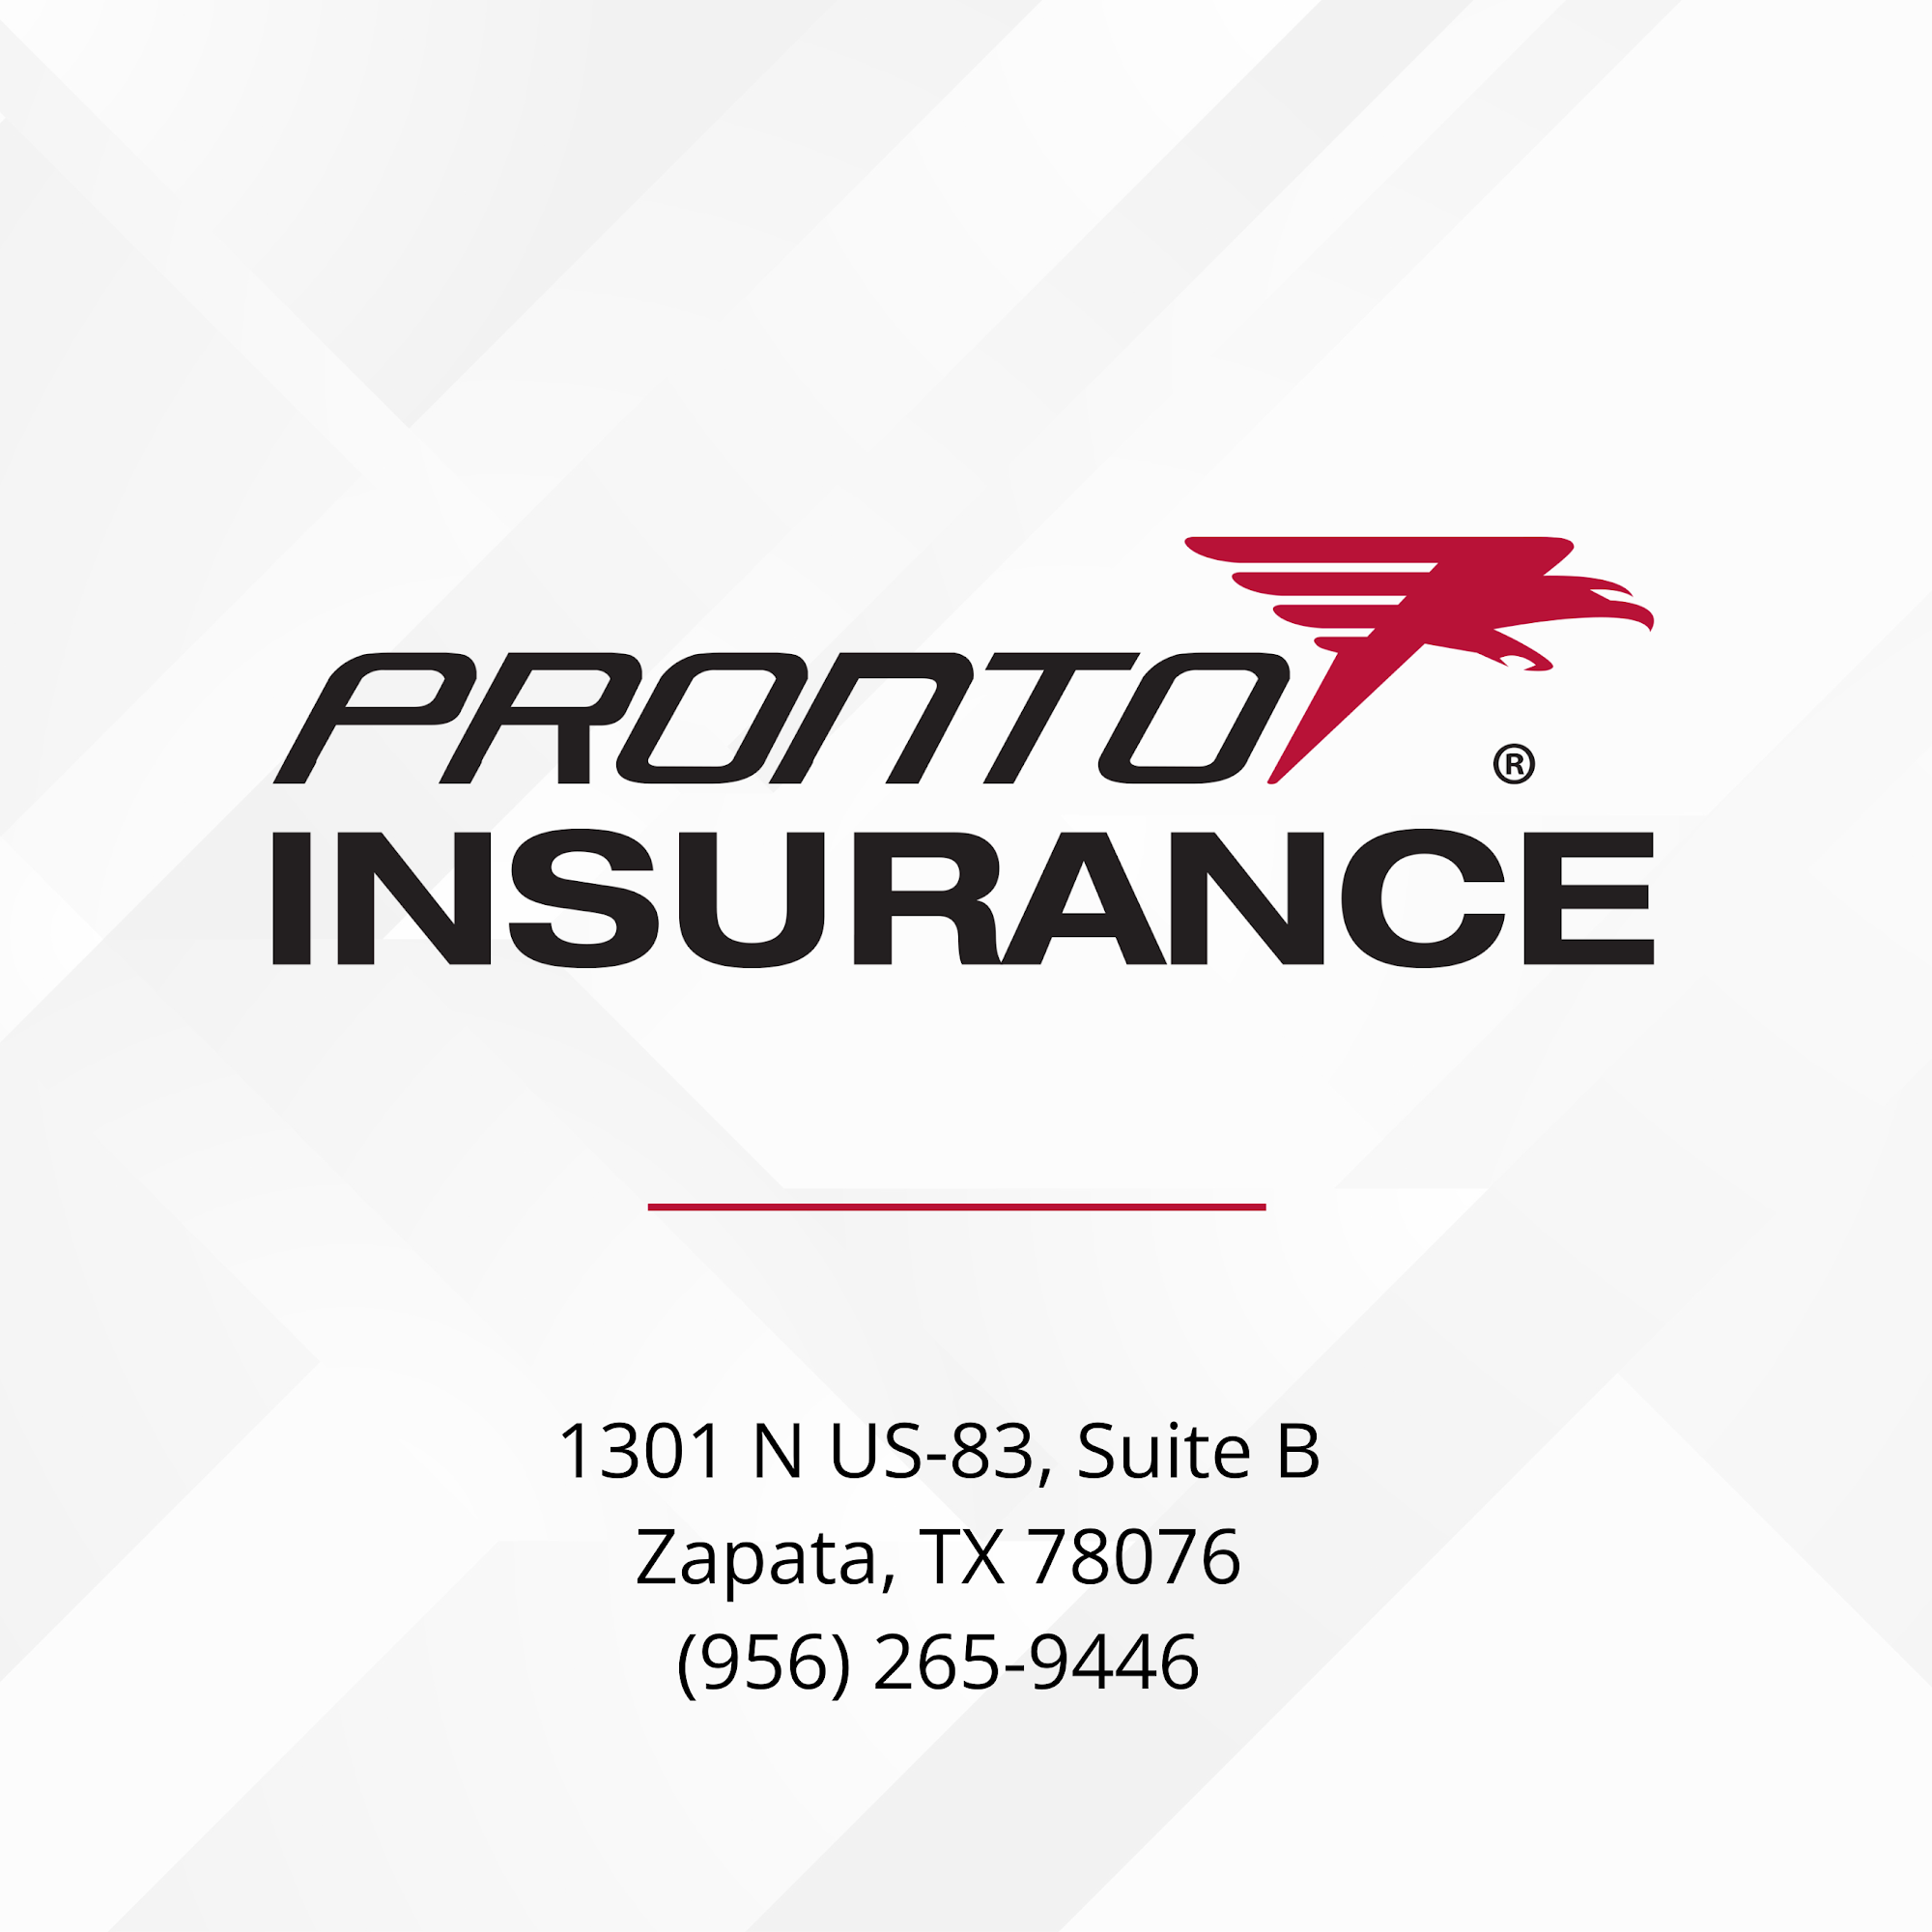 Pronto Insurance 1301 US-83 b, Zapata Texas 78076